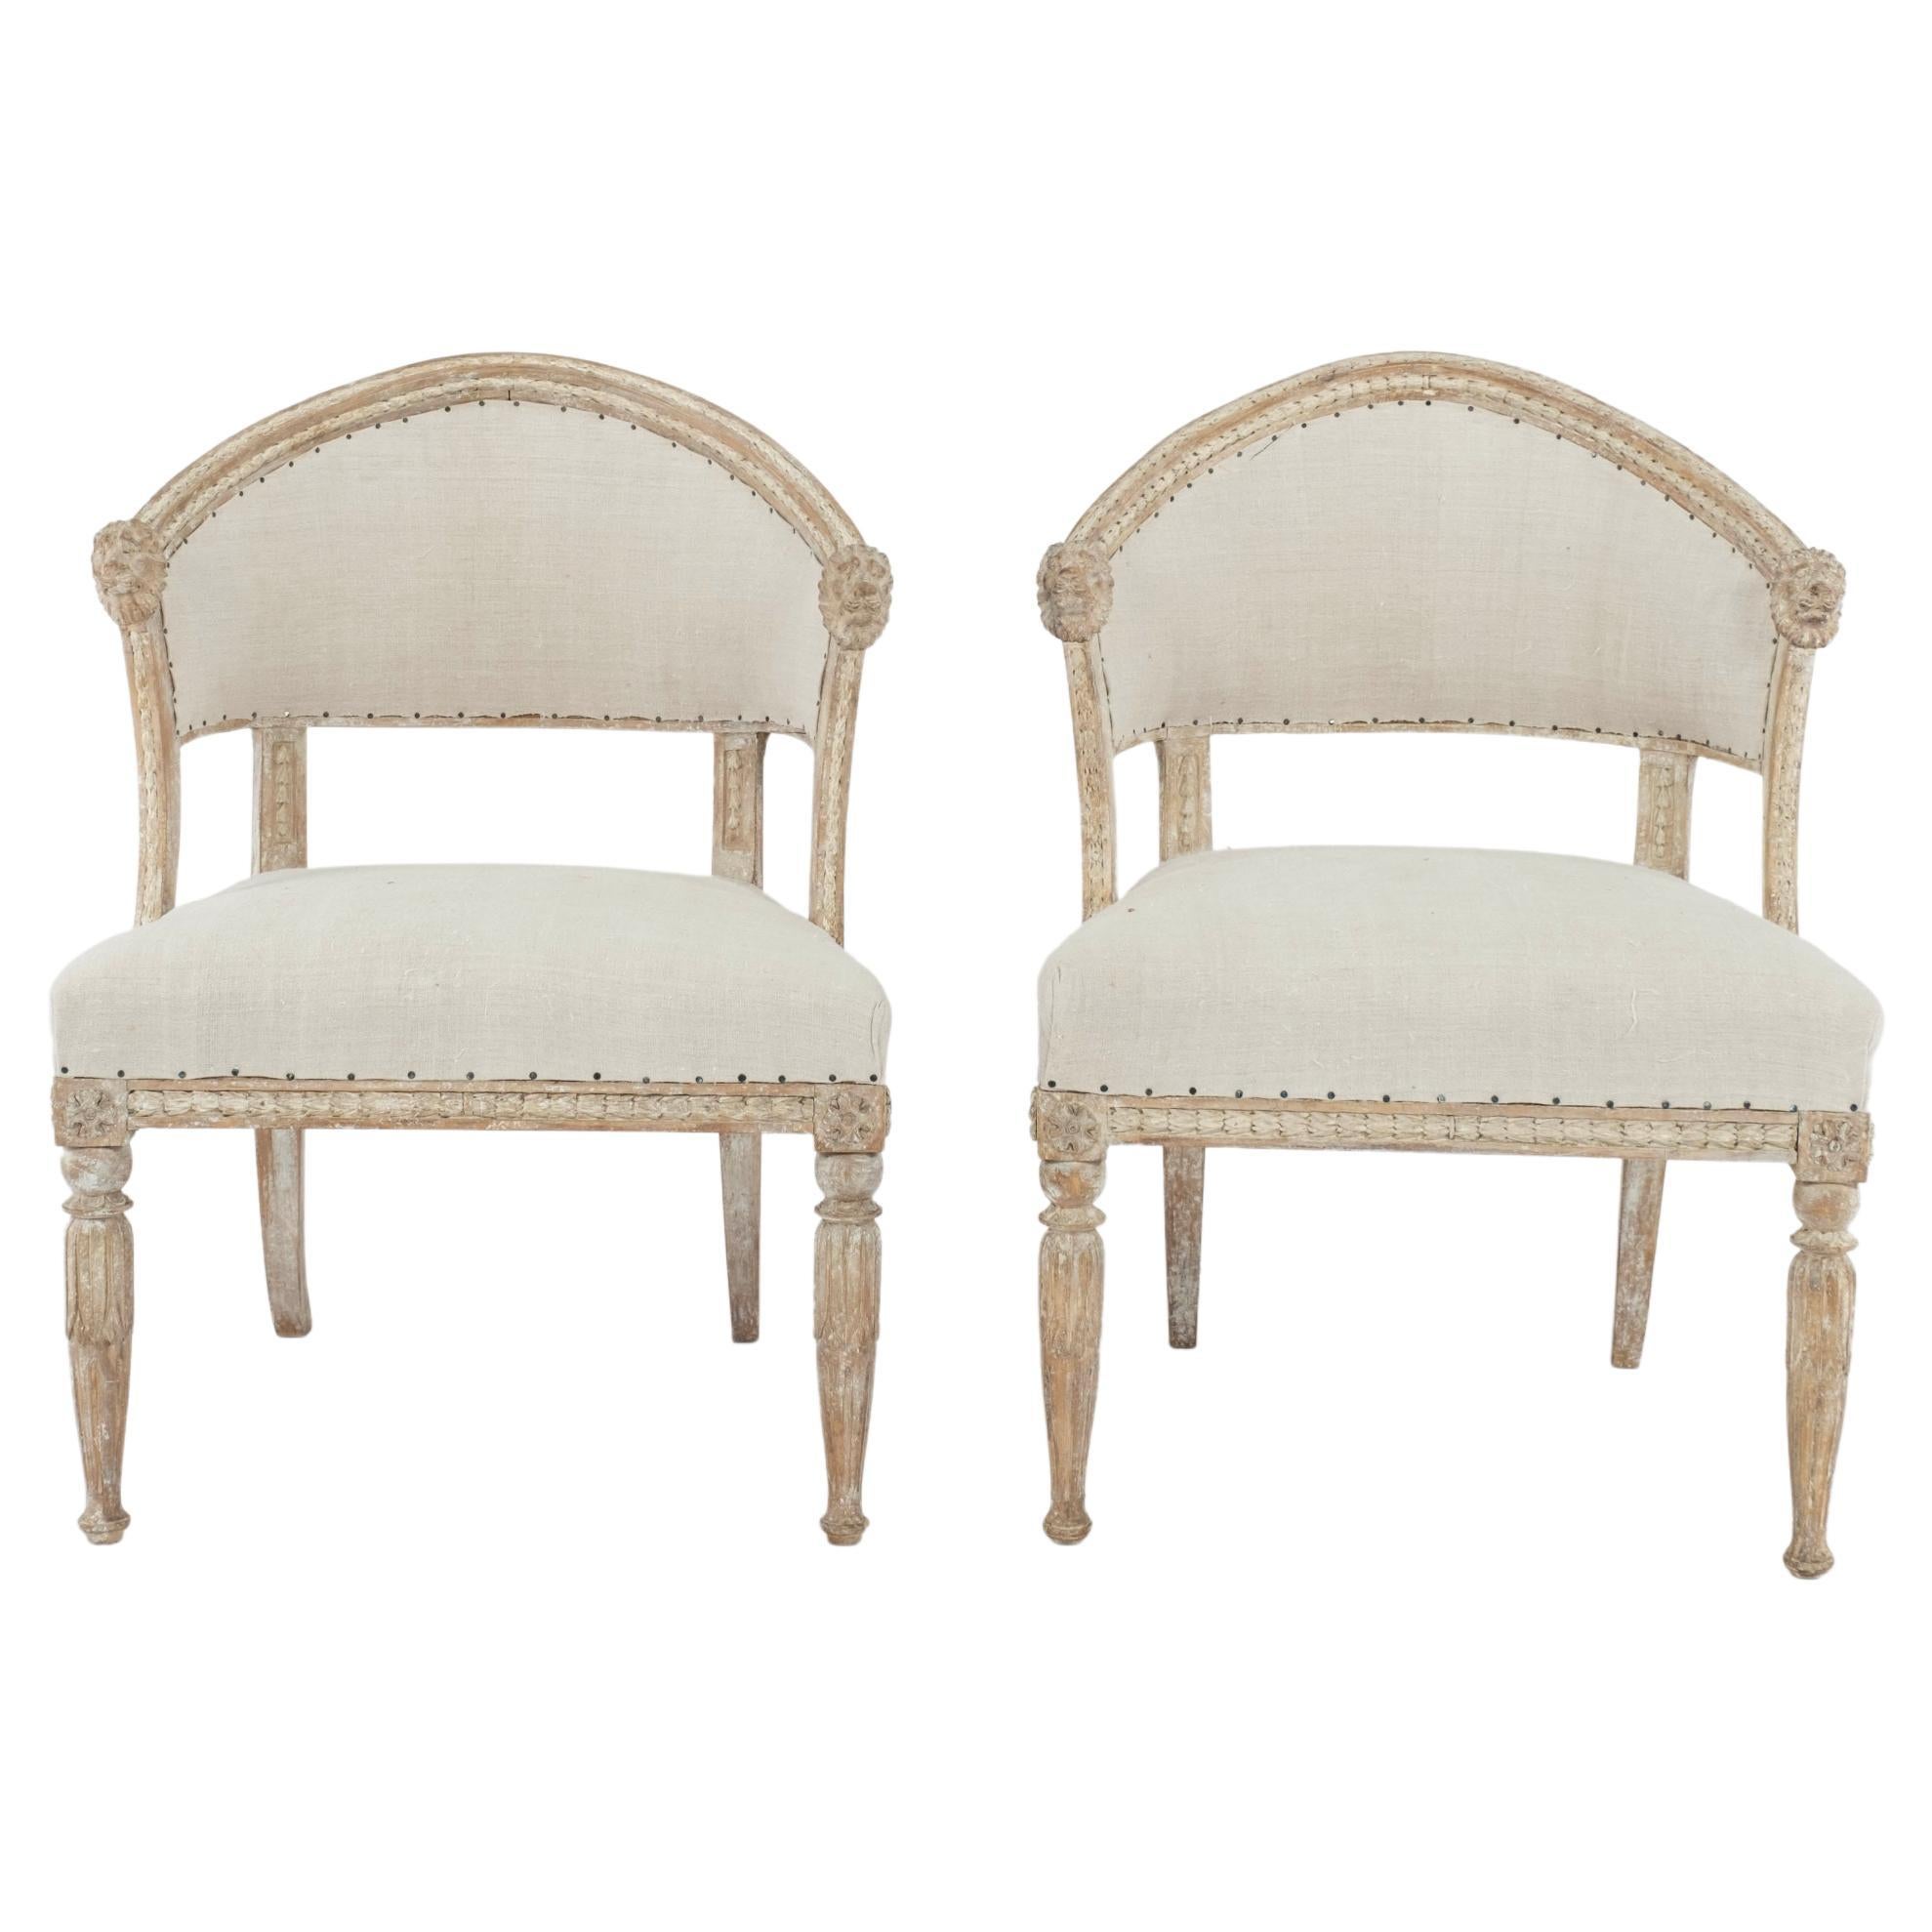 Pair of 19th C. Swedish Gustavian Barrel Back Chairs